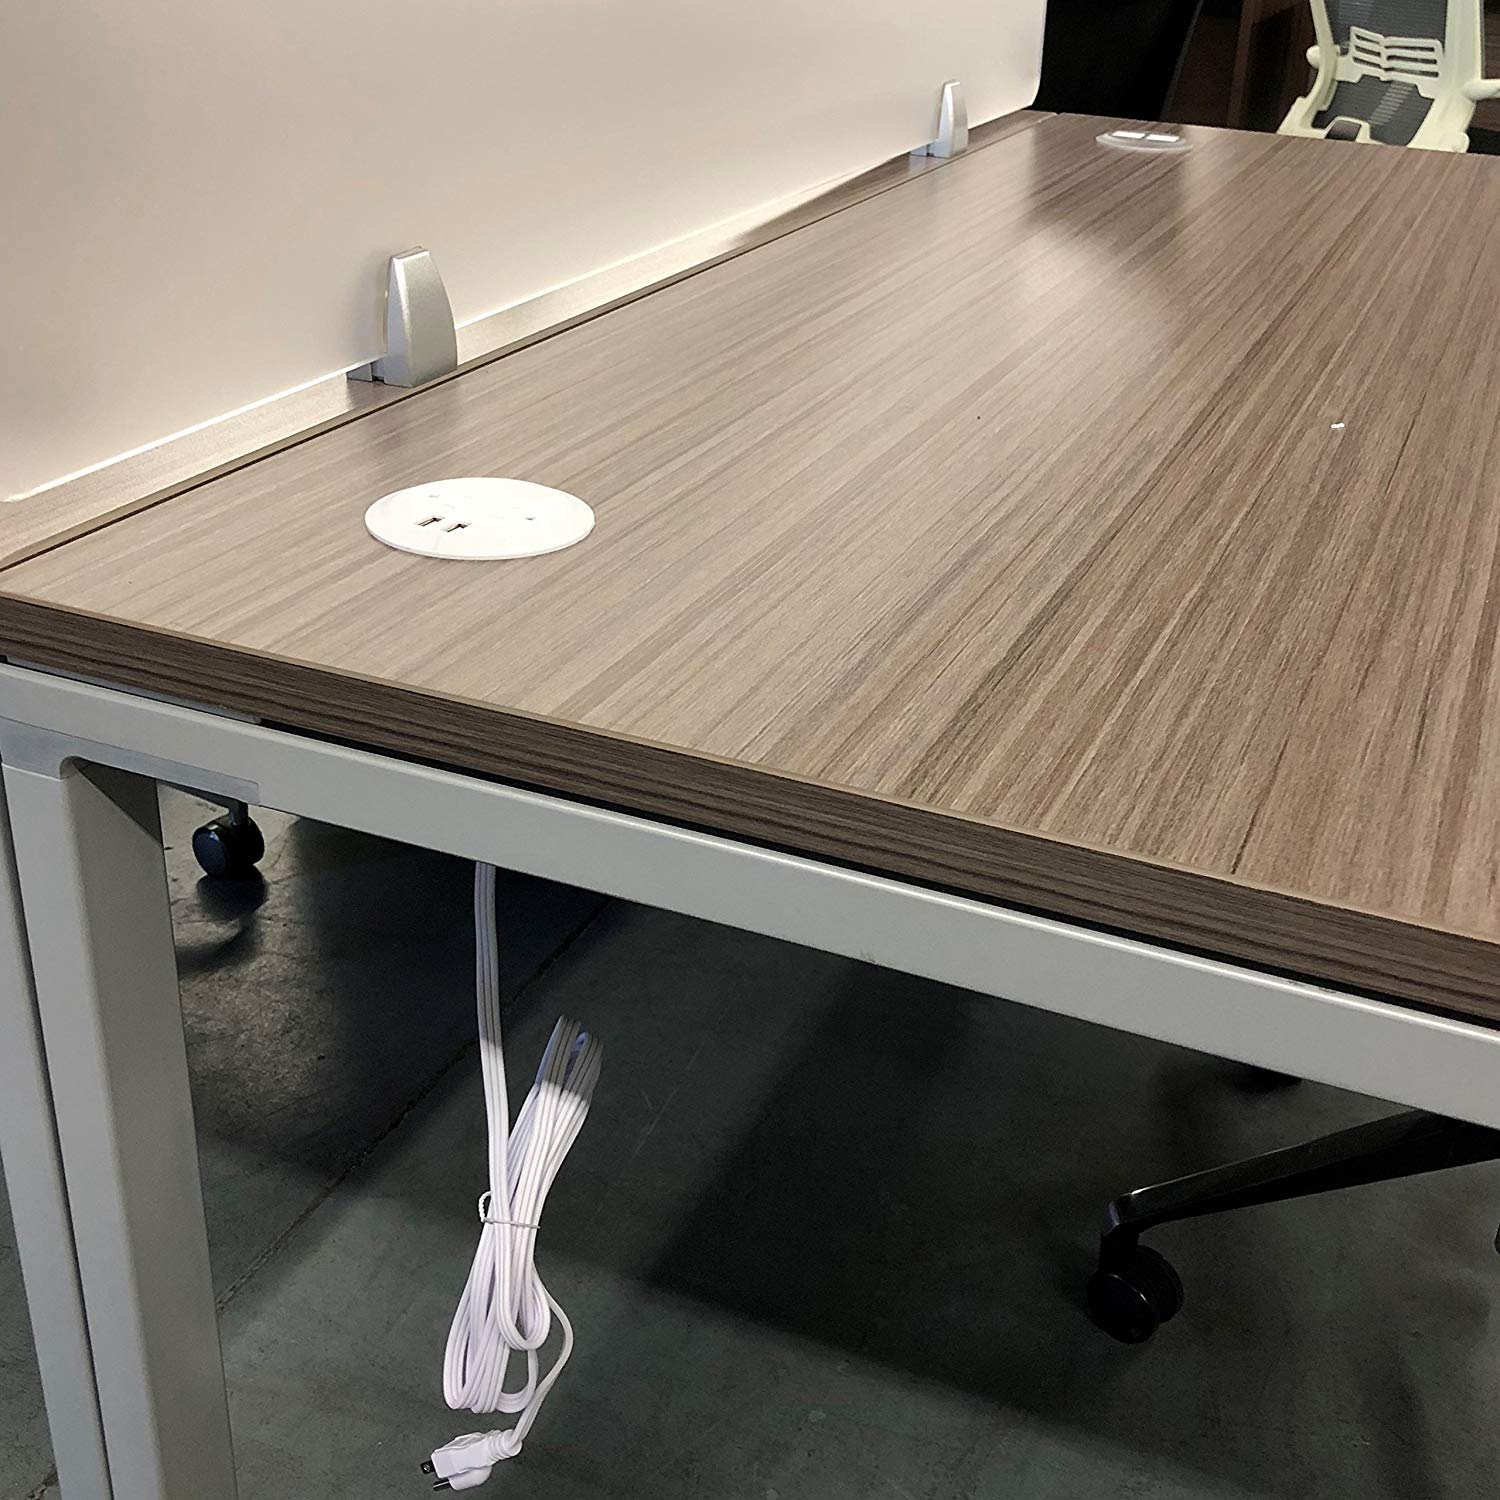 Pwr Plug Power Grommet For Desk Office Furniture Fits 3 Inch